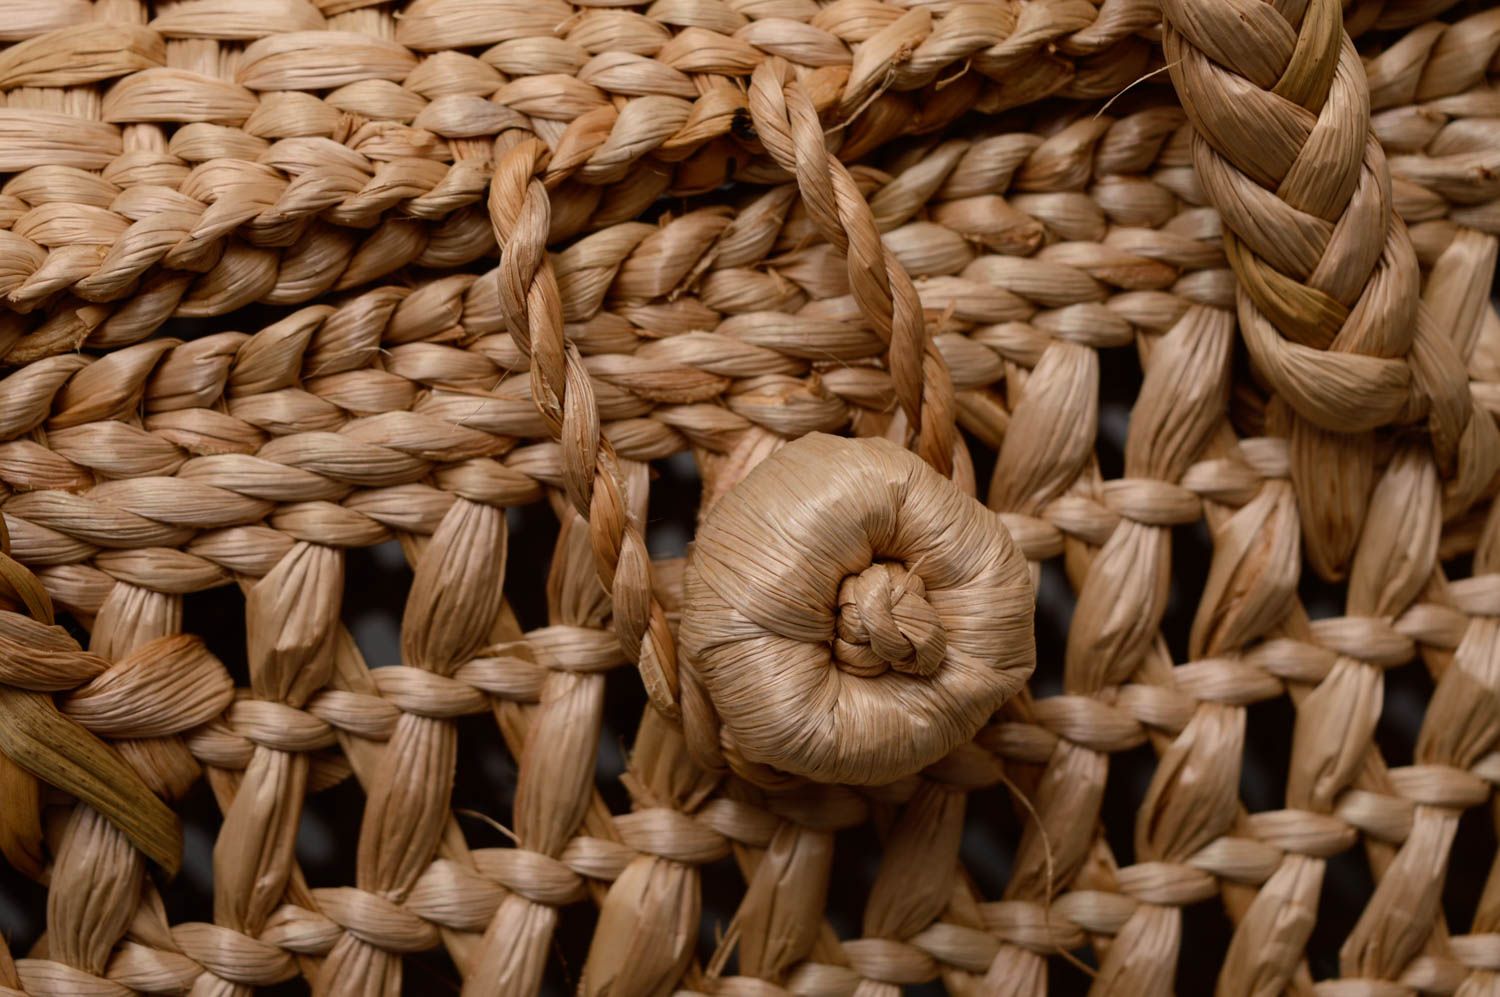 Woven reedmace basket purse photo 2